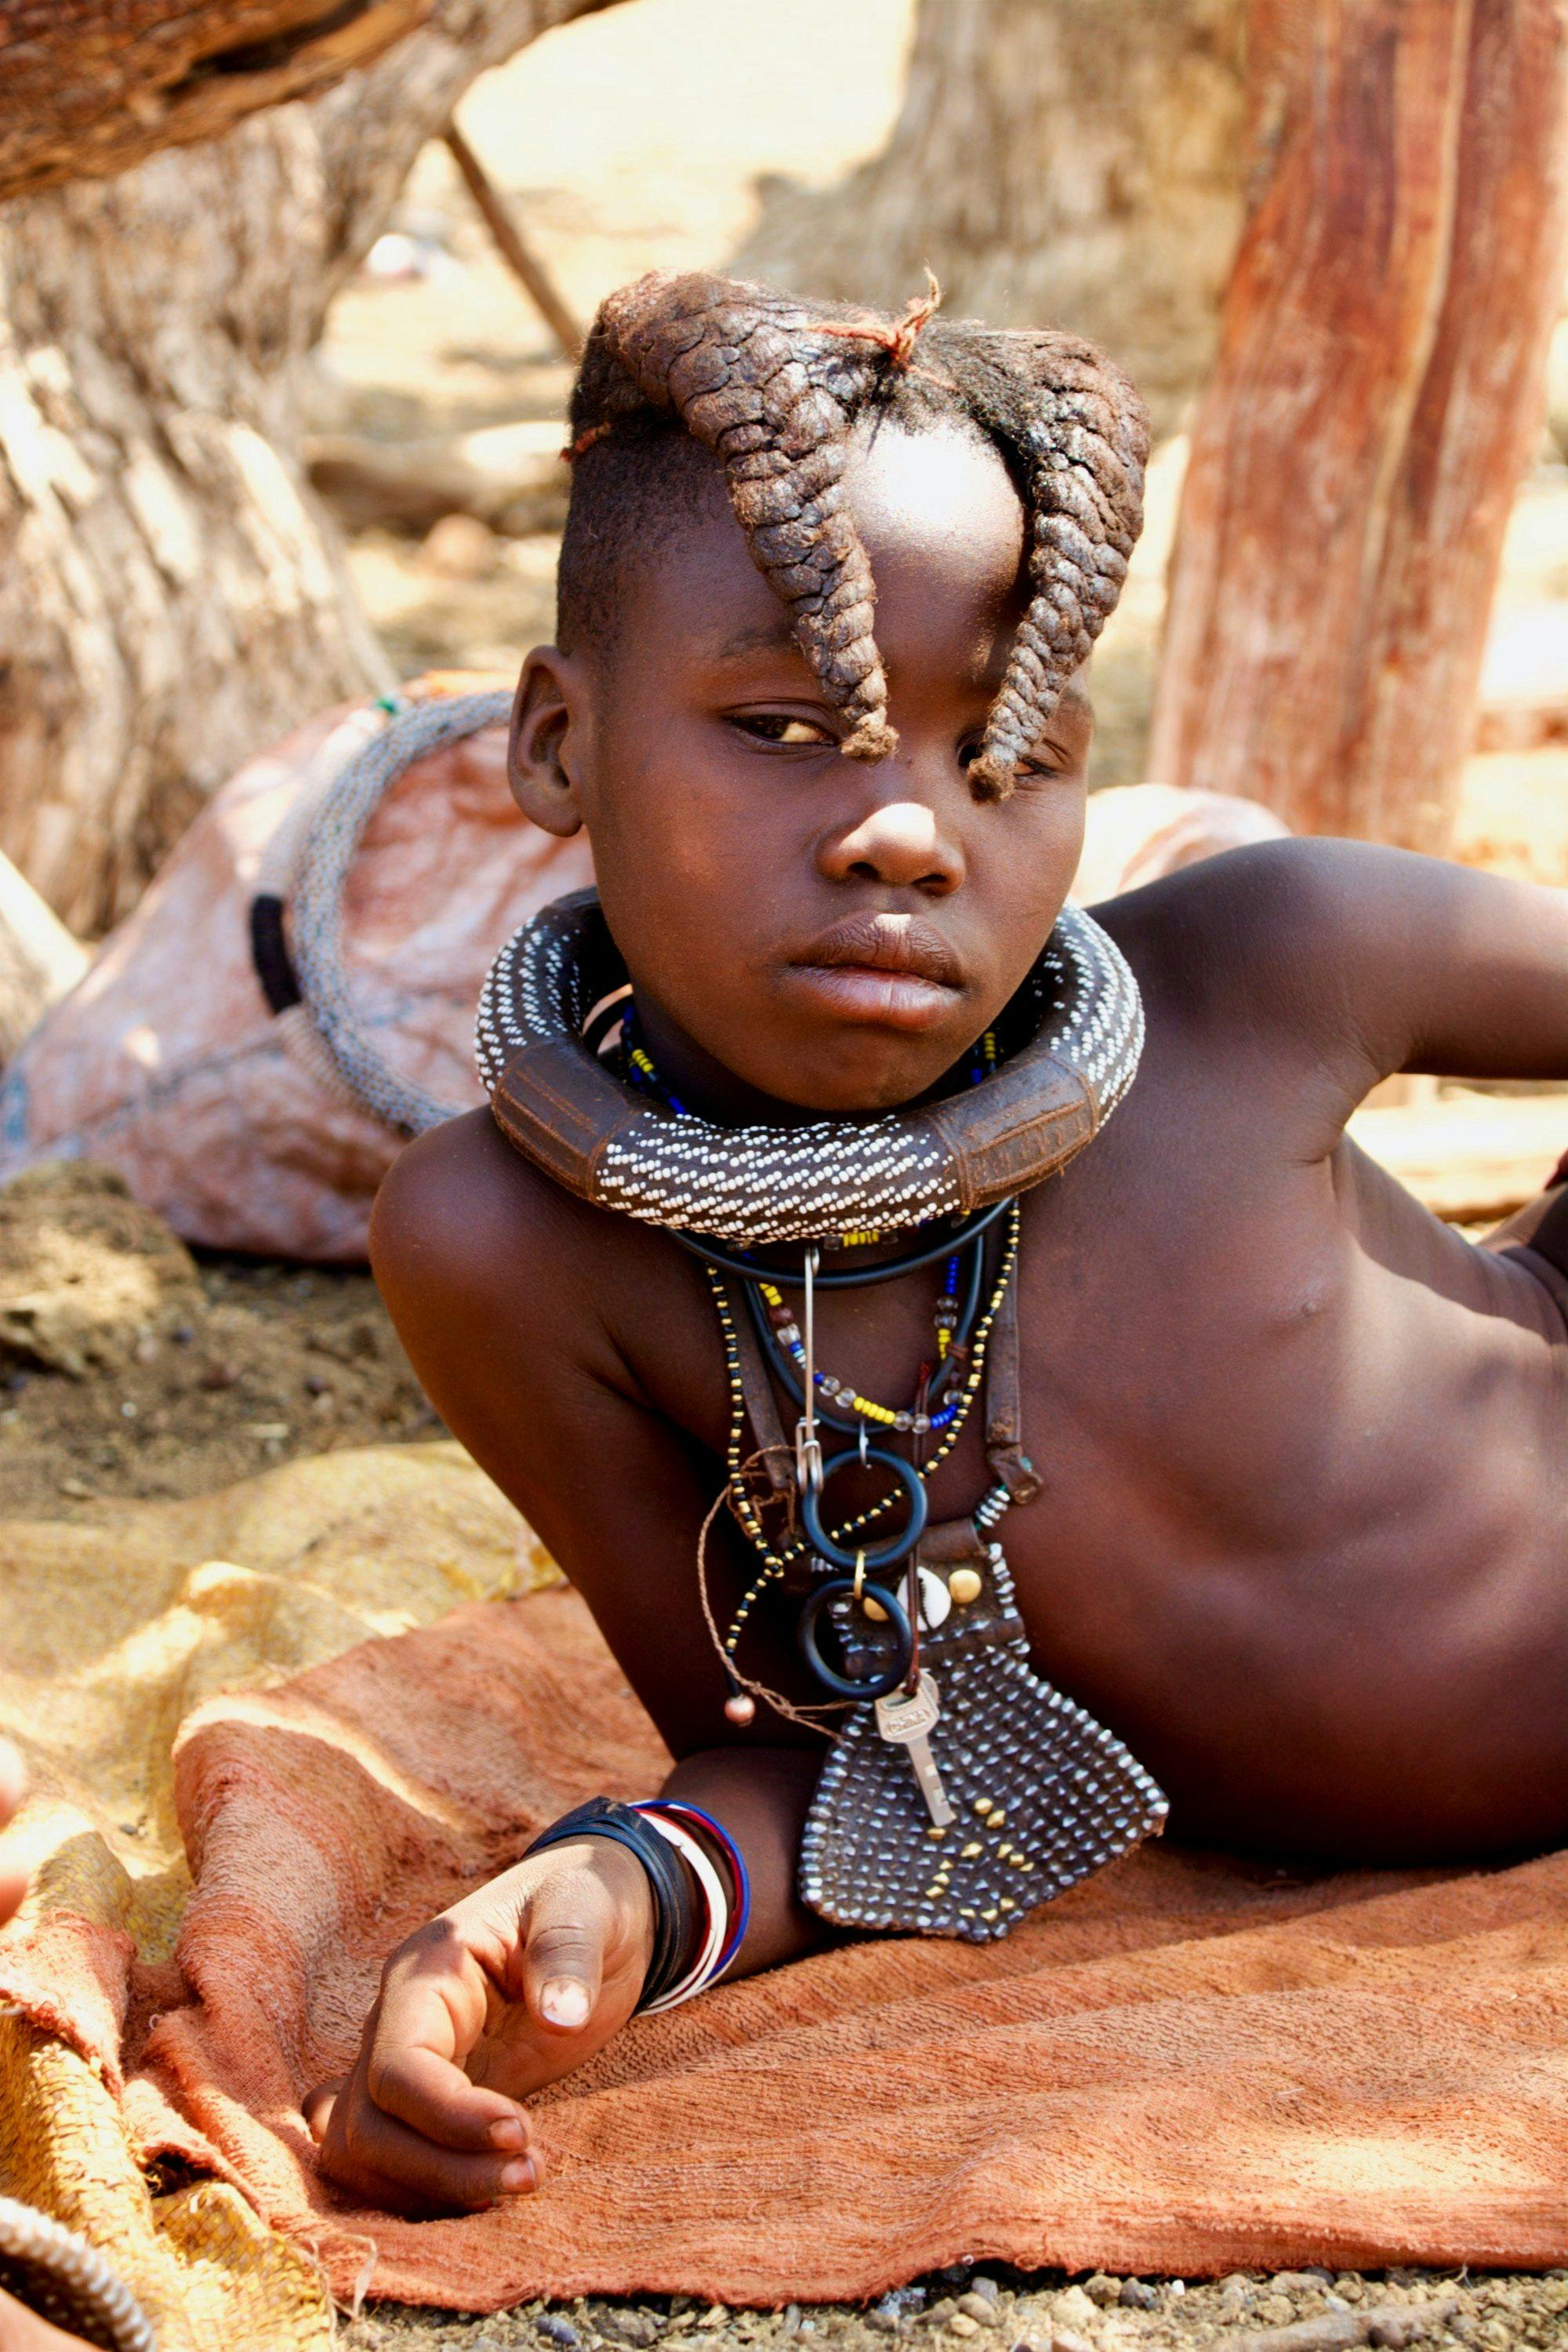 Himba boy in Namibia.